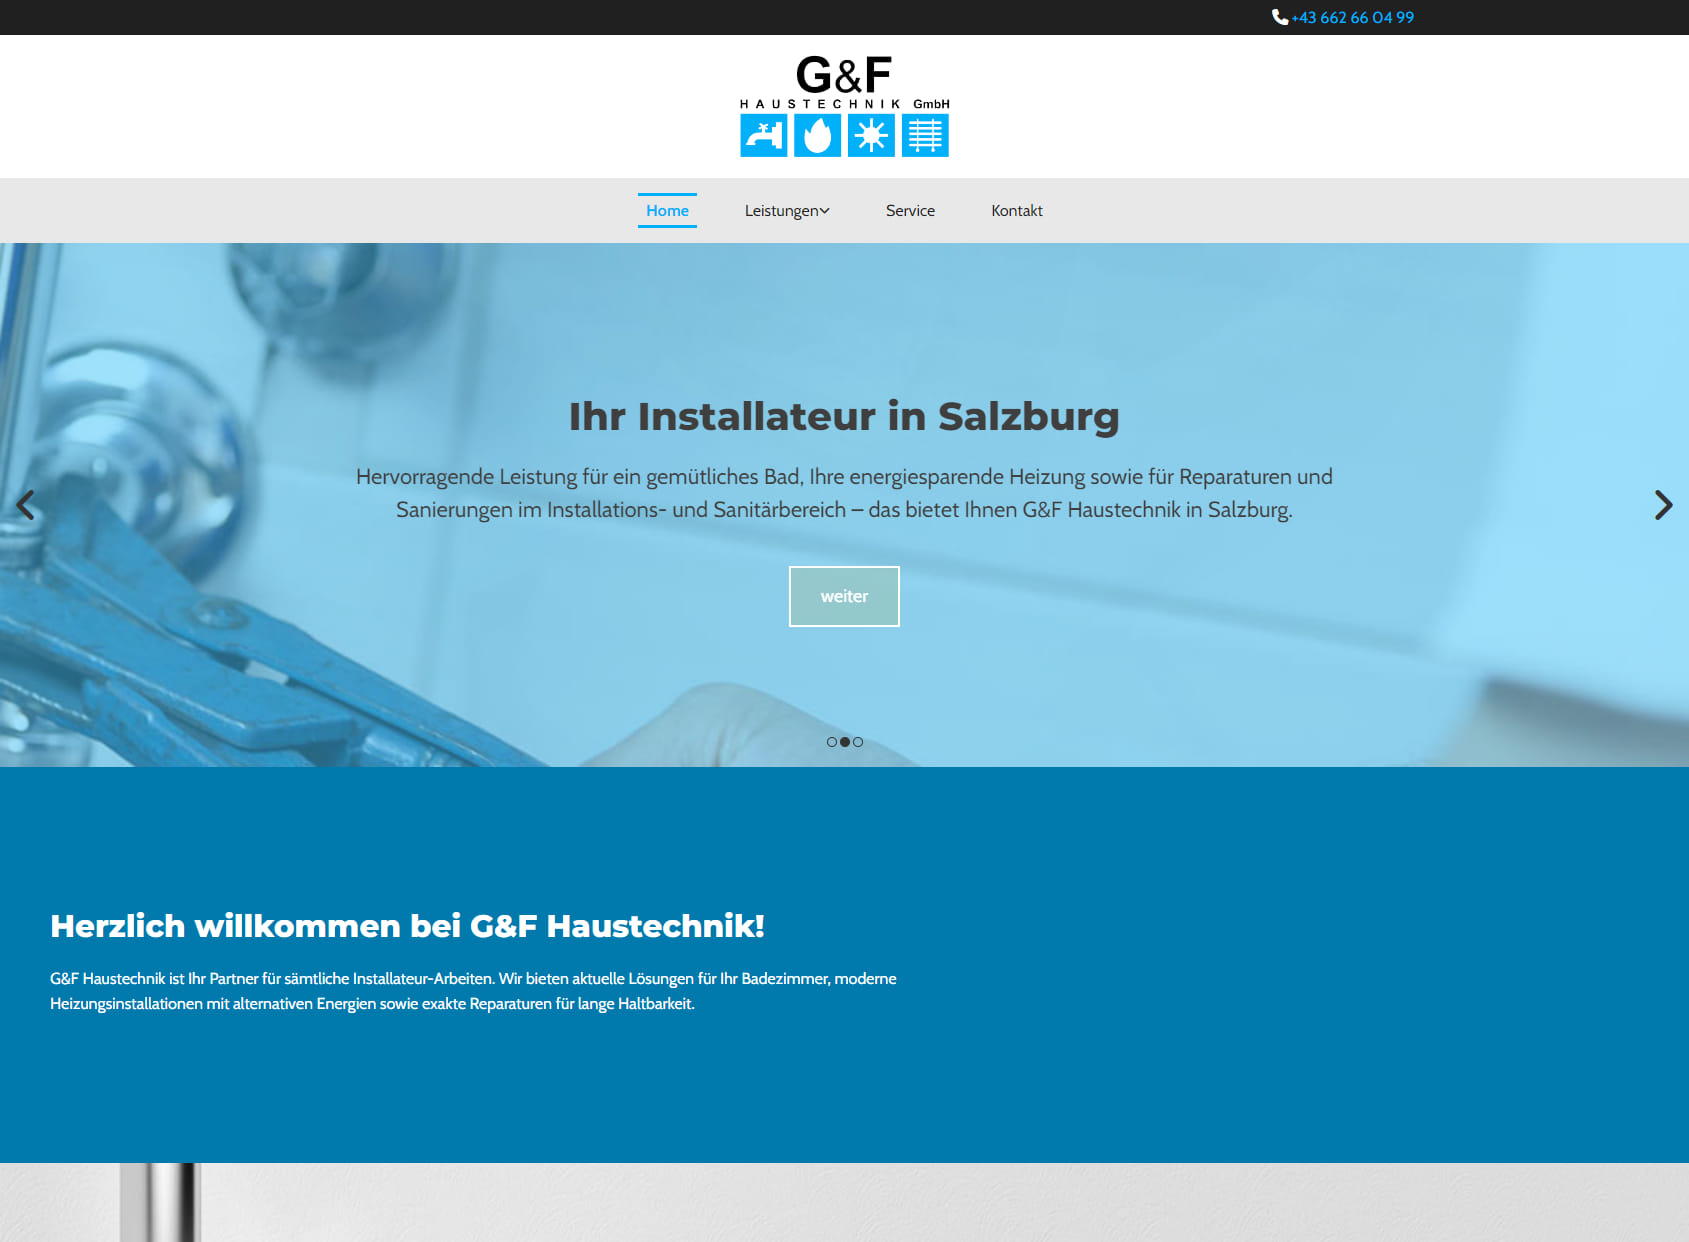 G&F Haustechnik GmbH